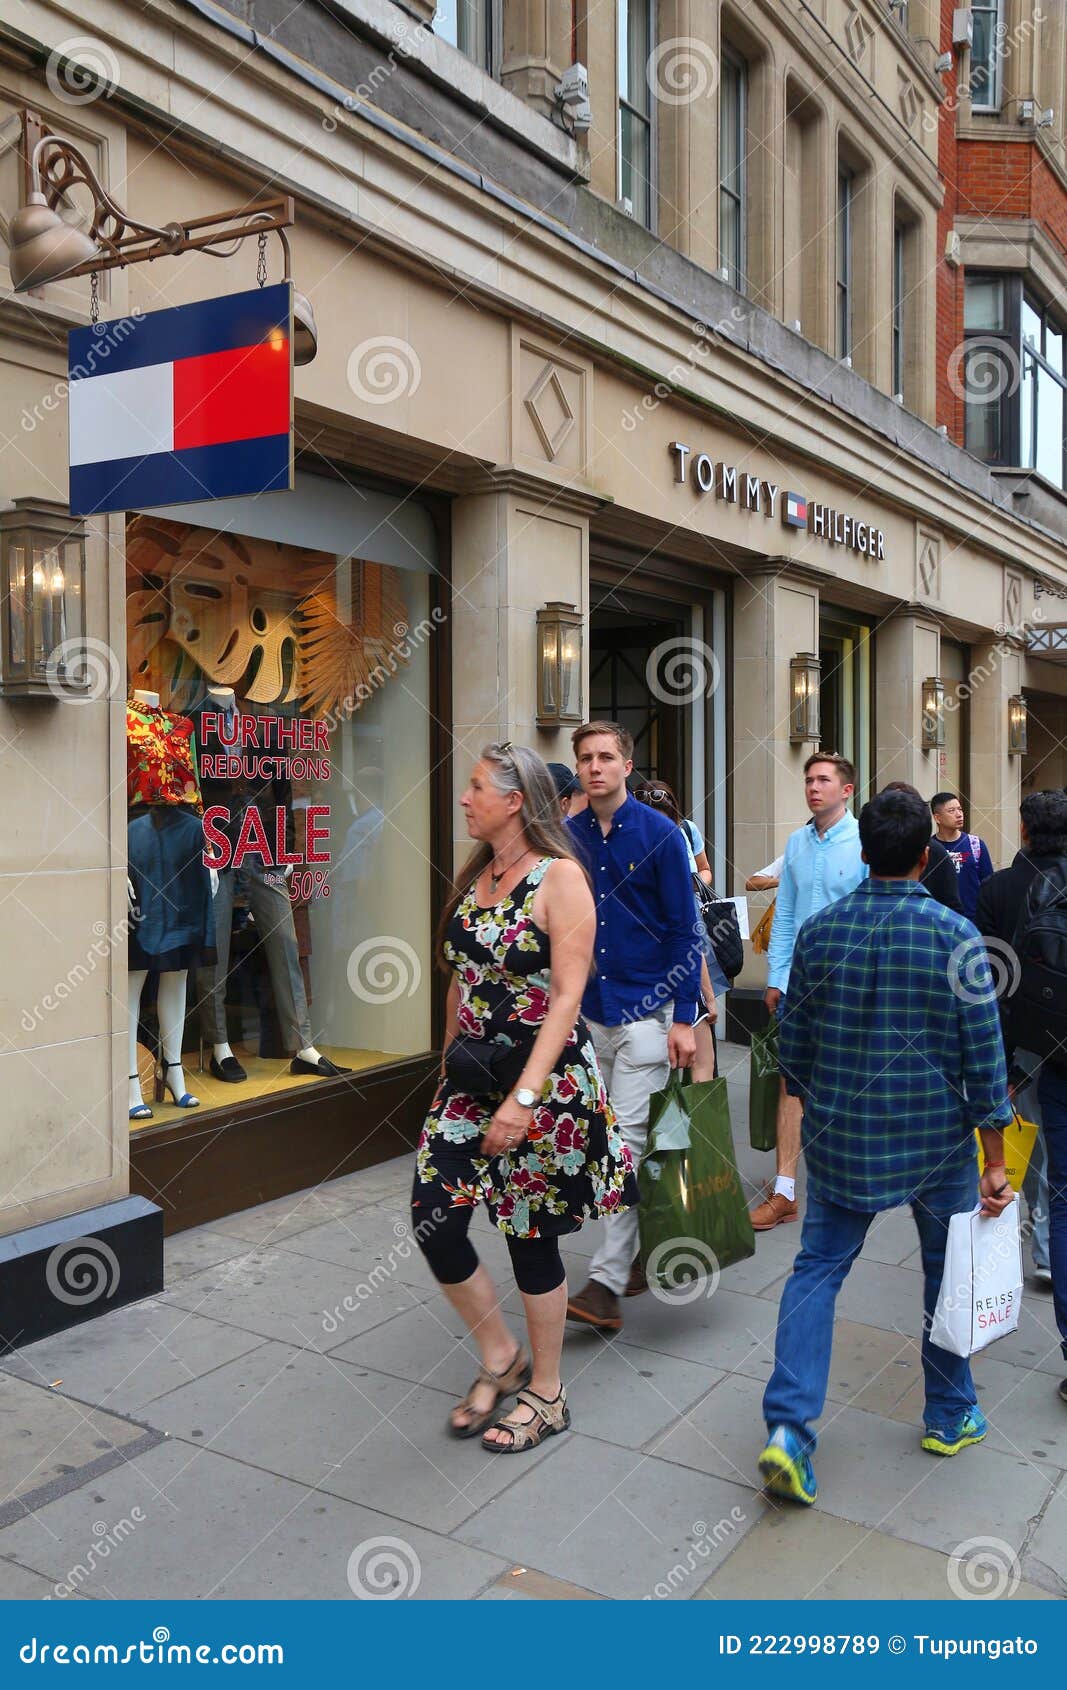 London Sloane Street Editorial Stock Image - Image of shopper, company: